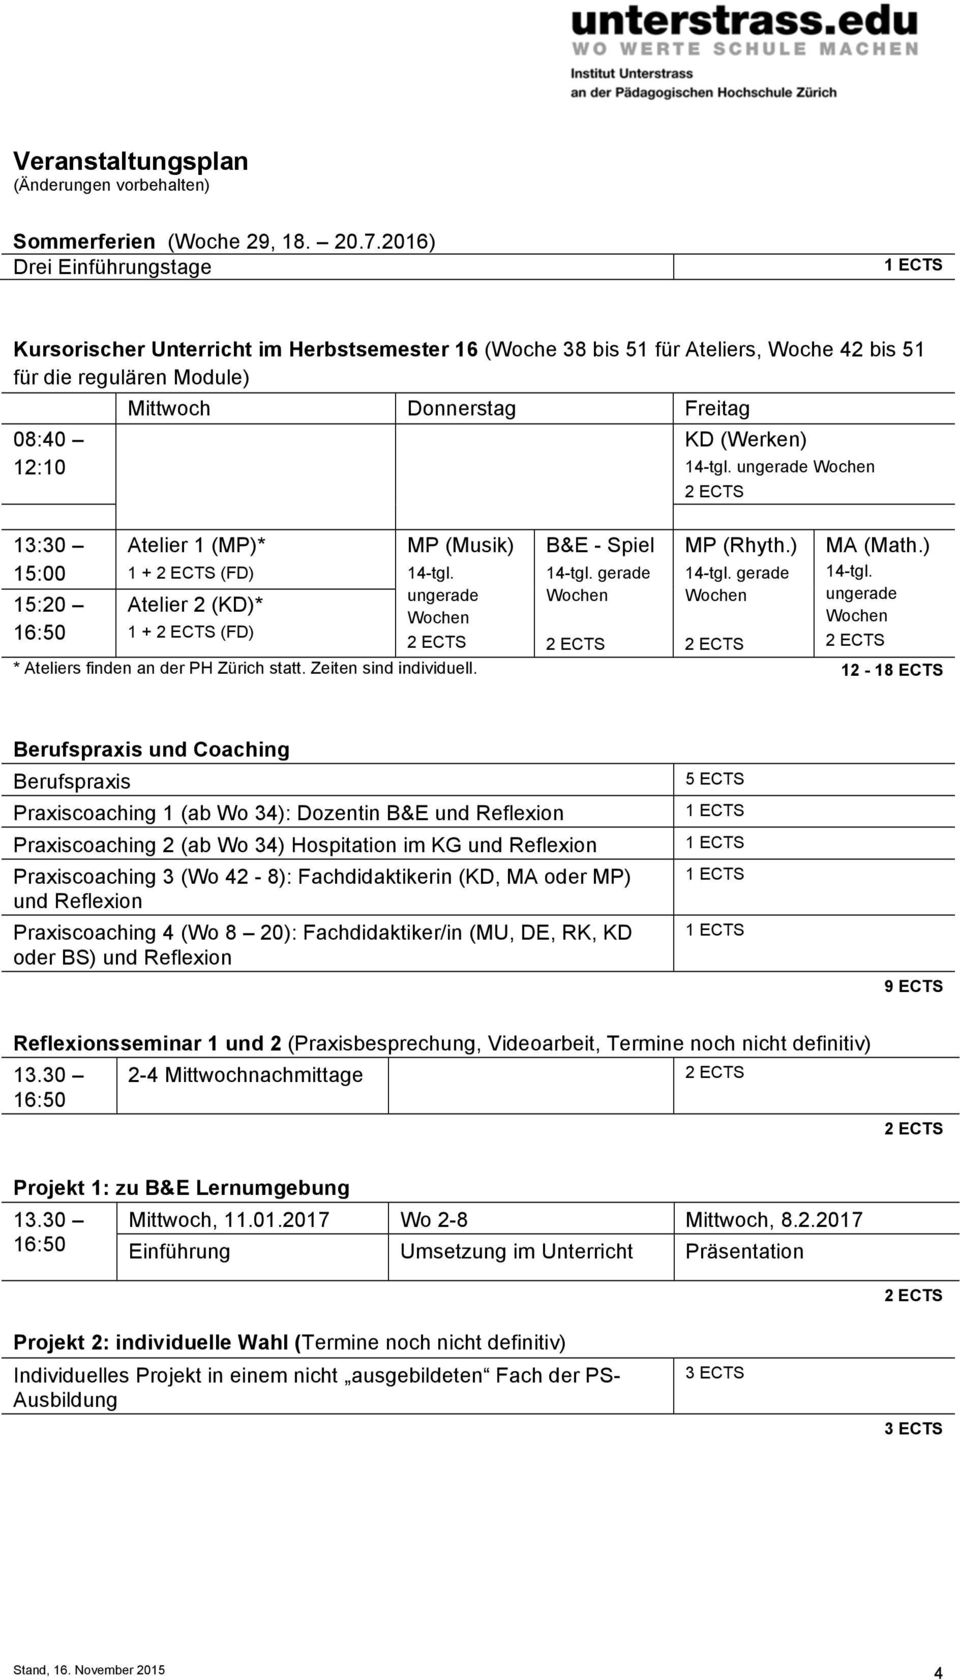 14-tgl. ungerade 13:30 15:00 15:20 Atelier 1 (MP)* 1 + (FD) Atelier 2 (KD)* 1 + (FD) MP (Musik) 14-tgl. ungerade B&E - Spiel MP (Rhyth.) MA (Math.) 14-tgl. ungerade * Ateliers finden an der PH Zürich statt.